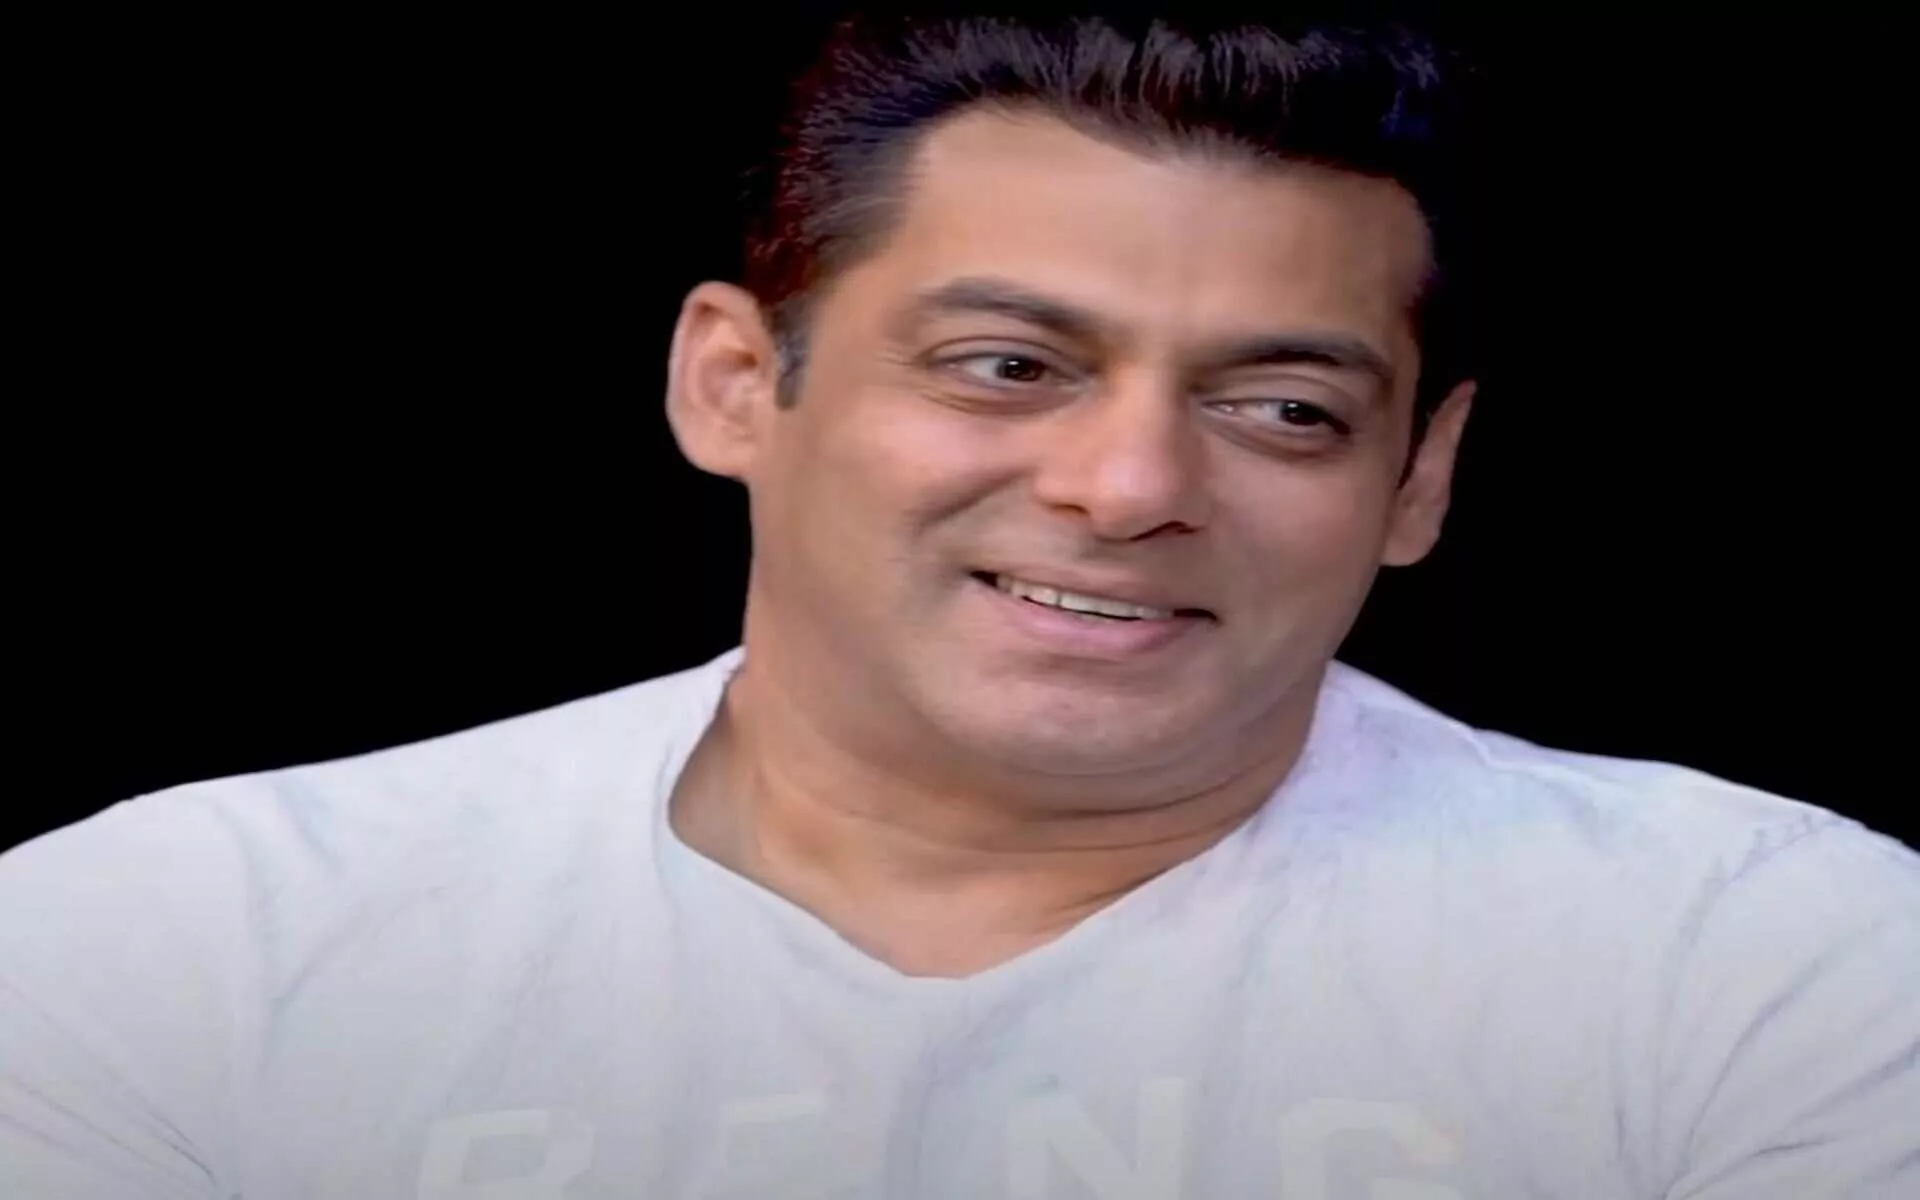 Salman Khan Seeti Maar song released today- He will be next seen in?